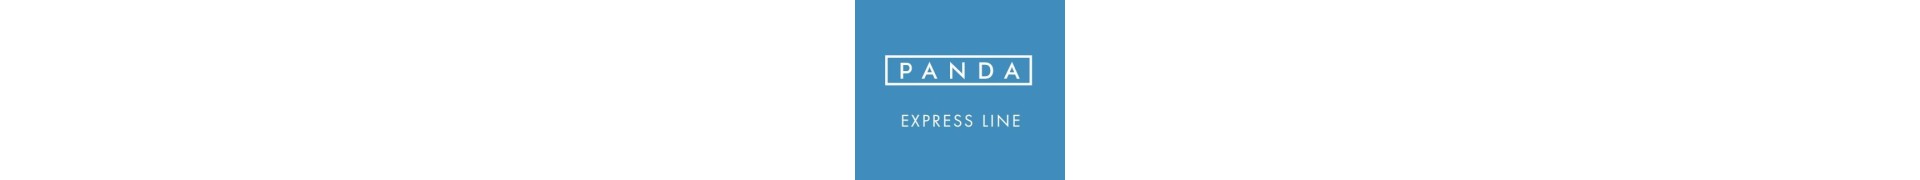 PANDA EXPRESS LINE 